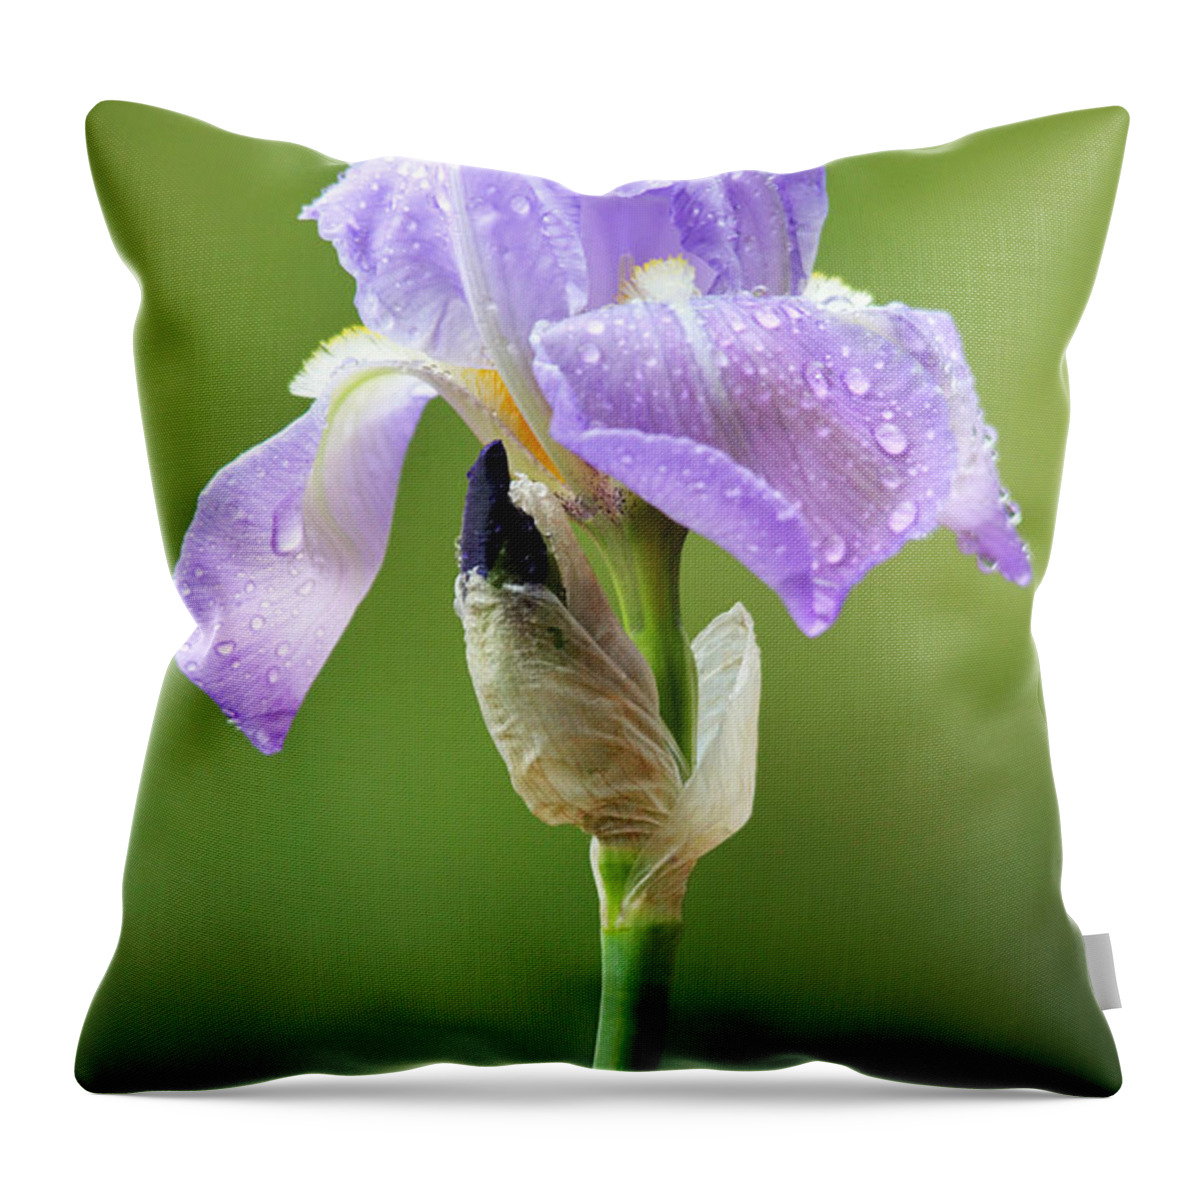 Iris Throw Pillow featuring the photograph Iris After the Rain by Trina Ansel